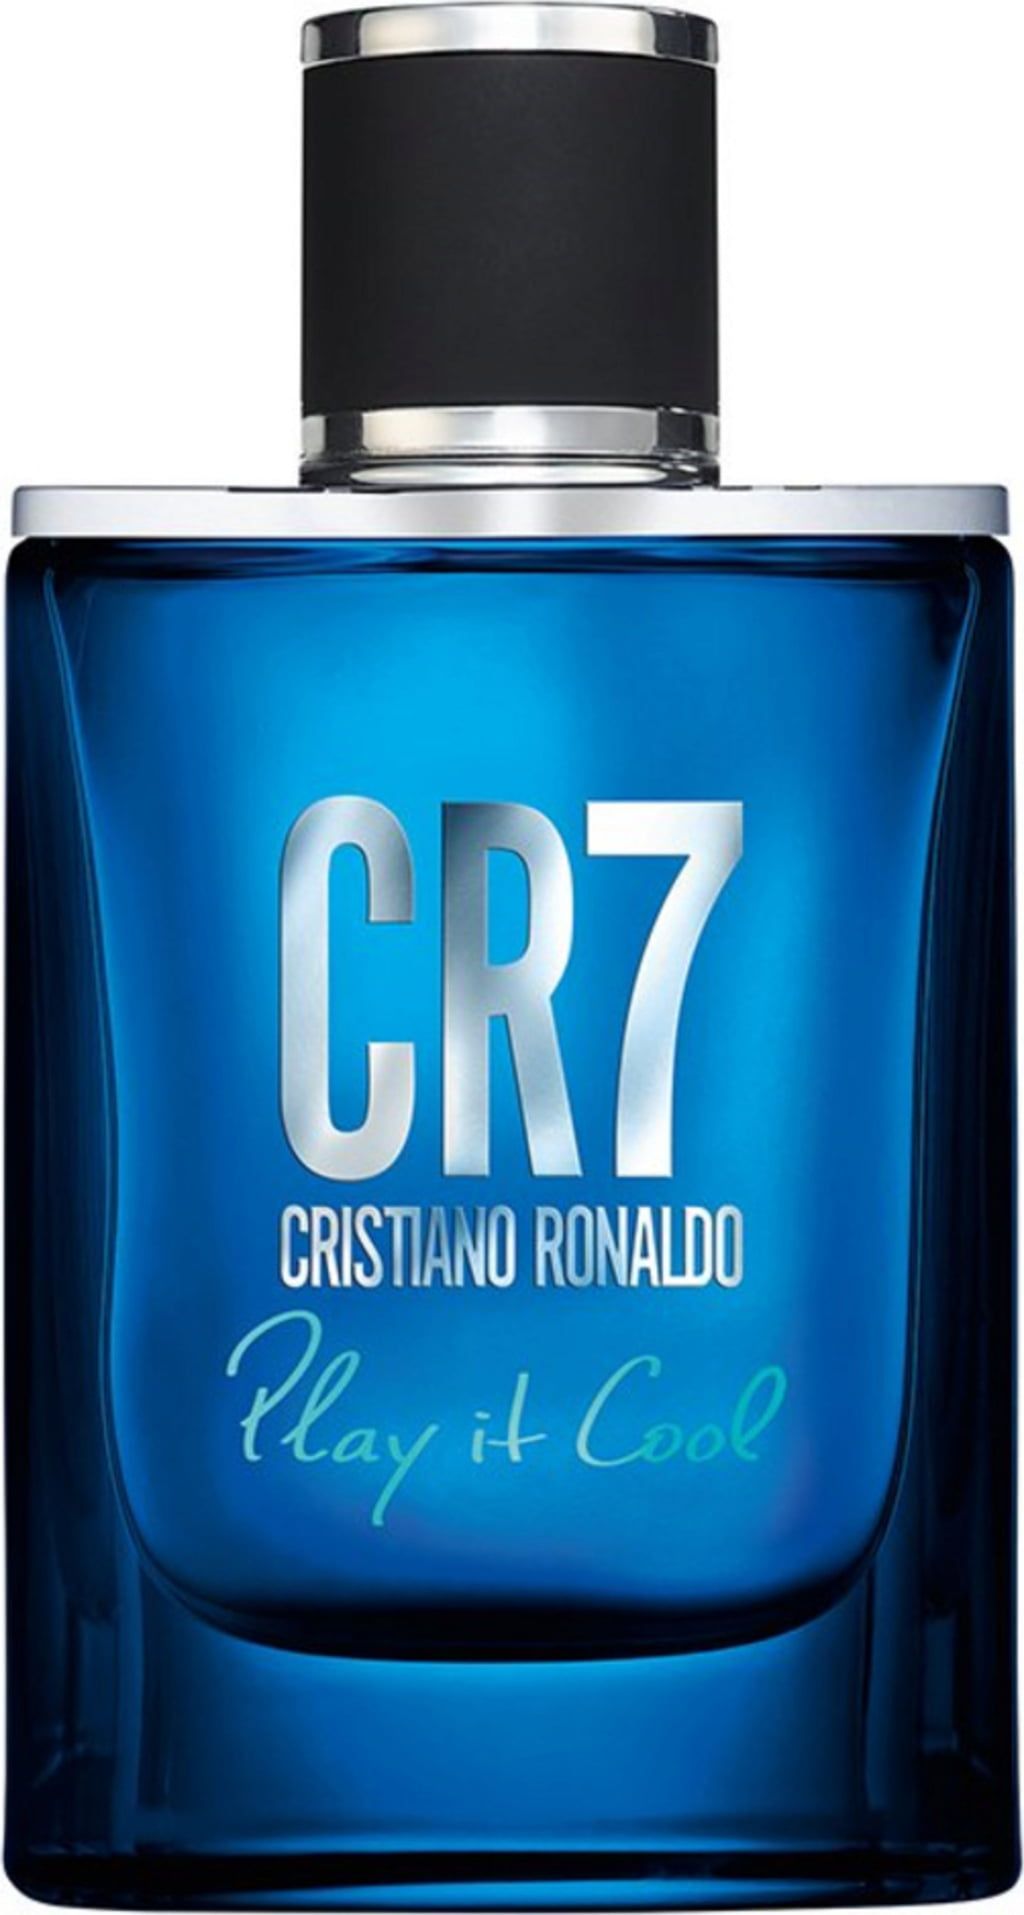 Cristiano Ronaldo CR7 Play It Cool Eau de Toilette, 30 ml - oh